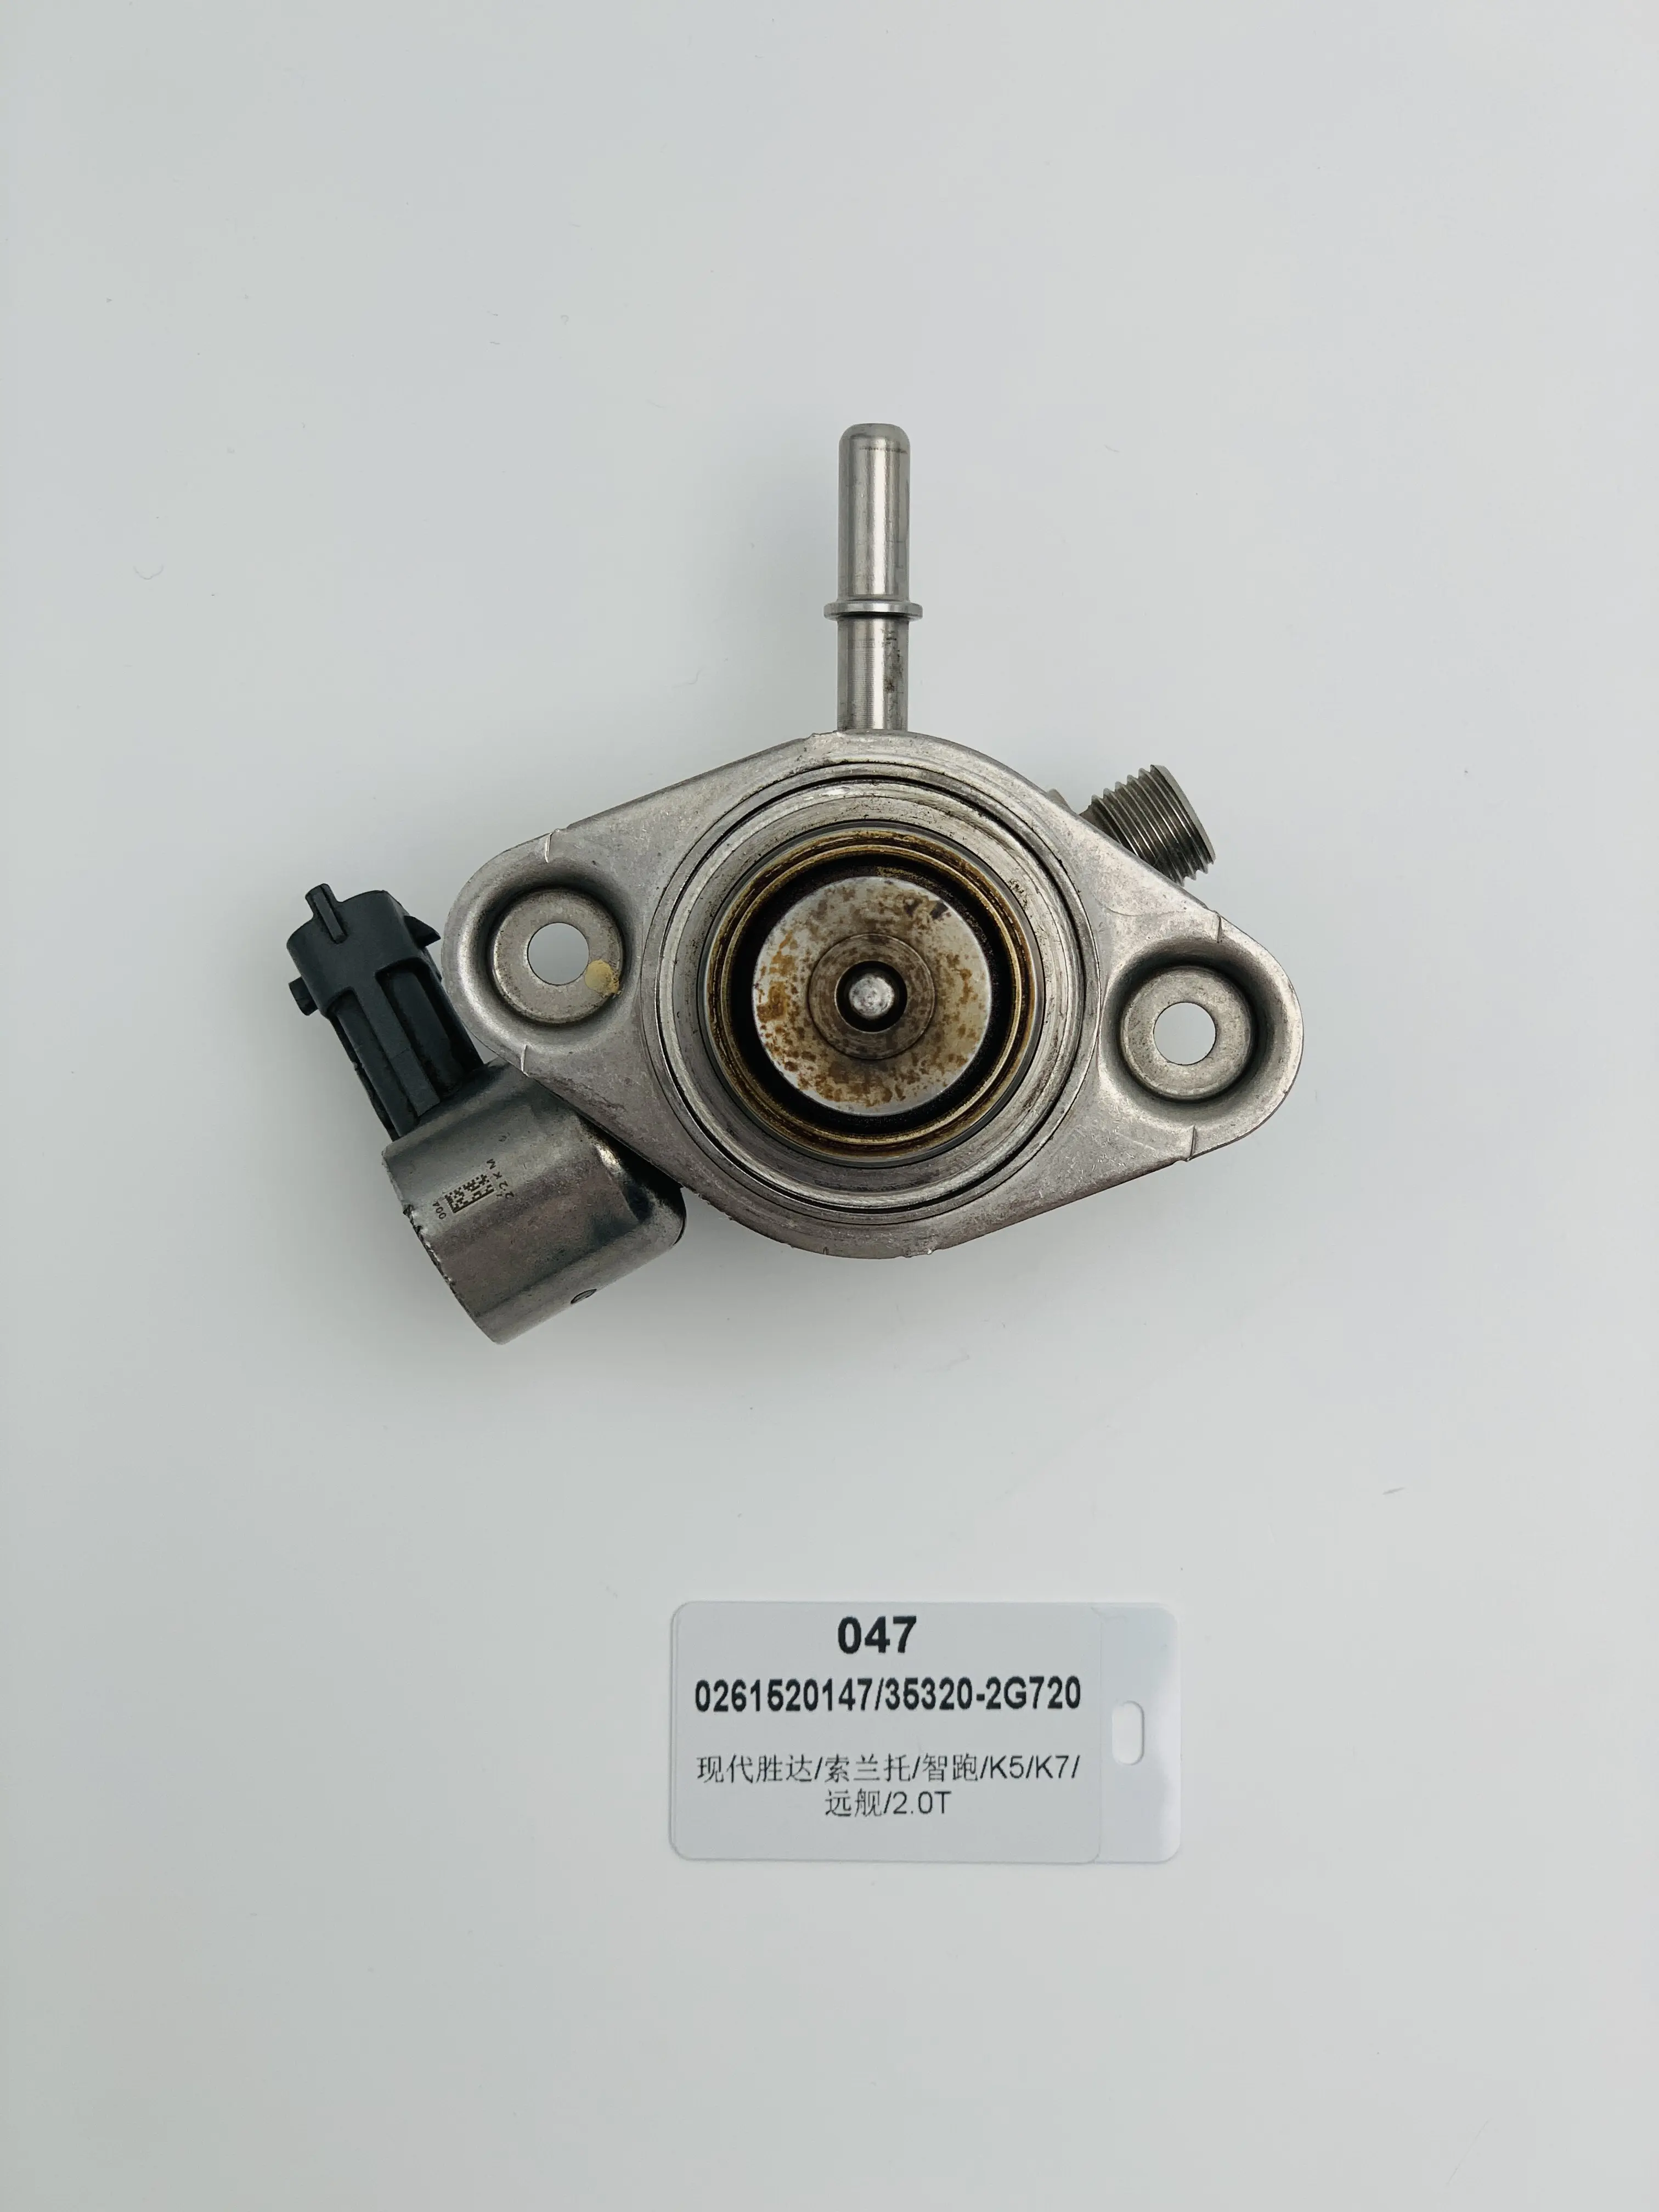 Pompe à haute pression moderne KIA 35320 - 2g720 35320 - 2g730 35320 - 2g740